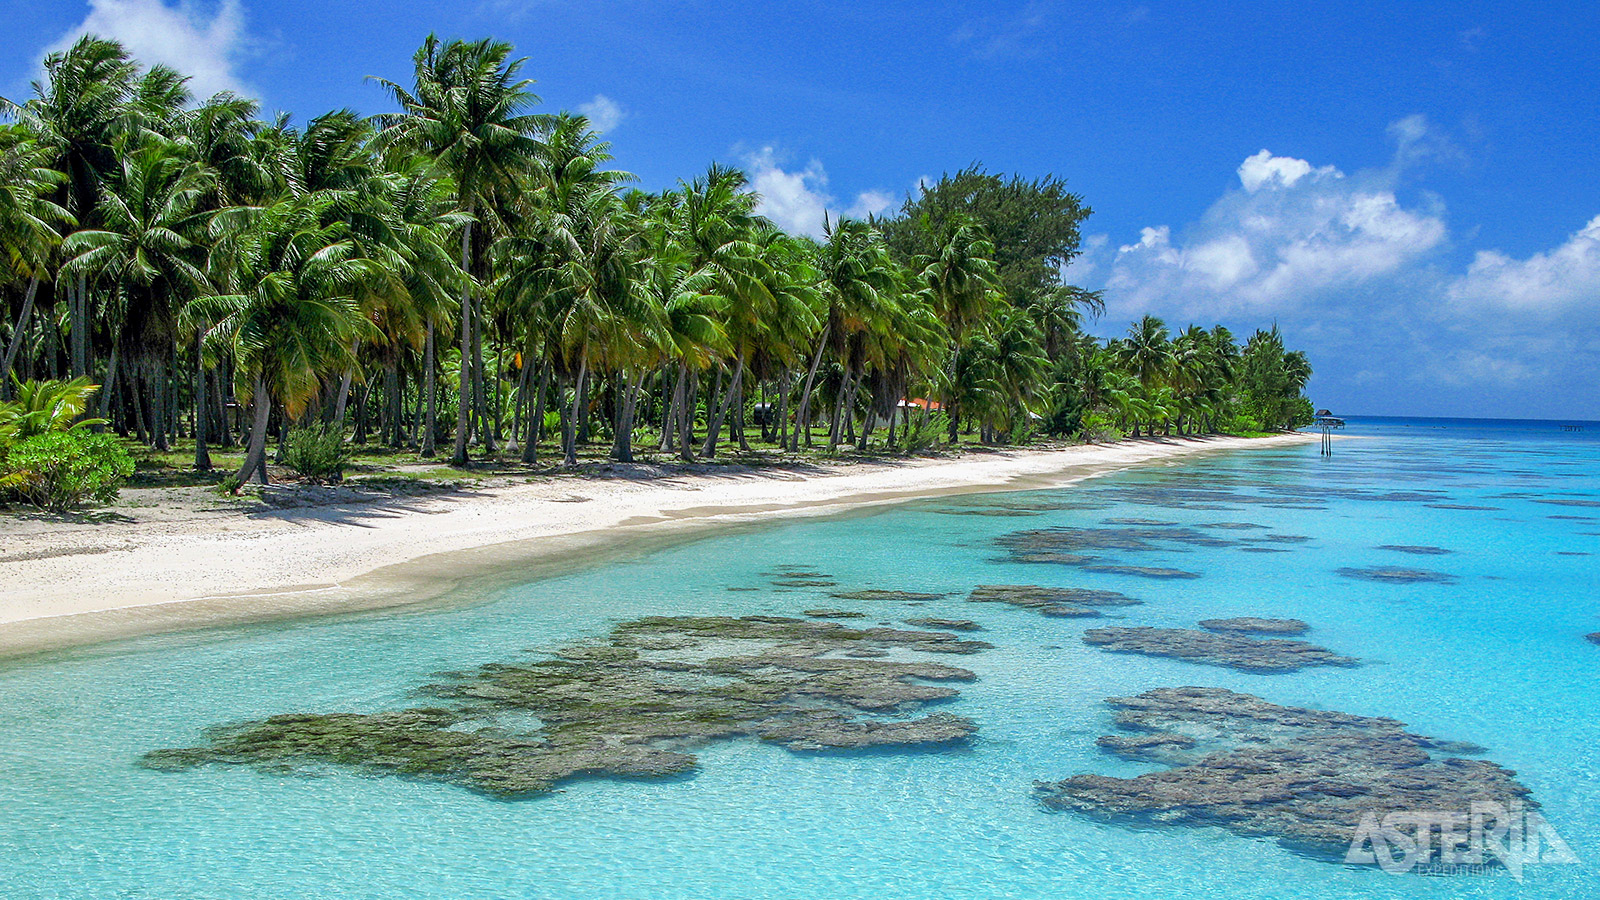 Fakarava met een lengte van 60km en breedte van 25km, is het op één na grootste atol van Frans-Polynesië